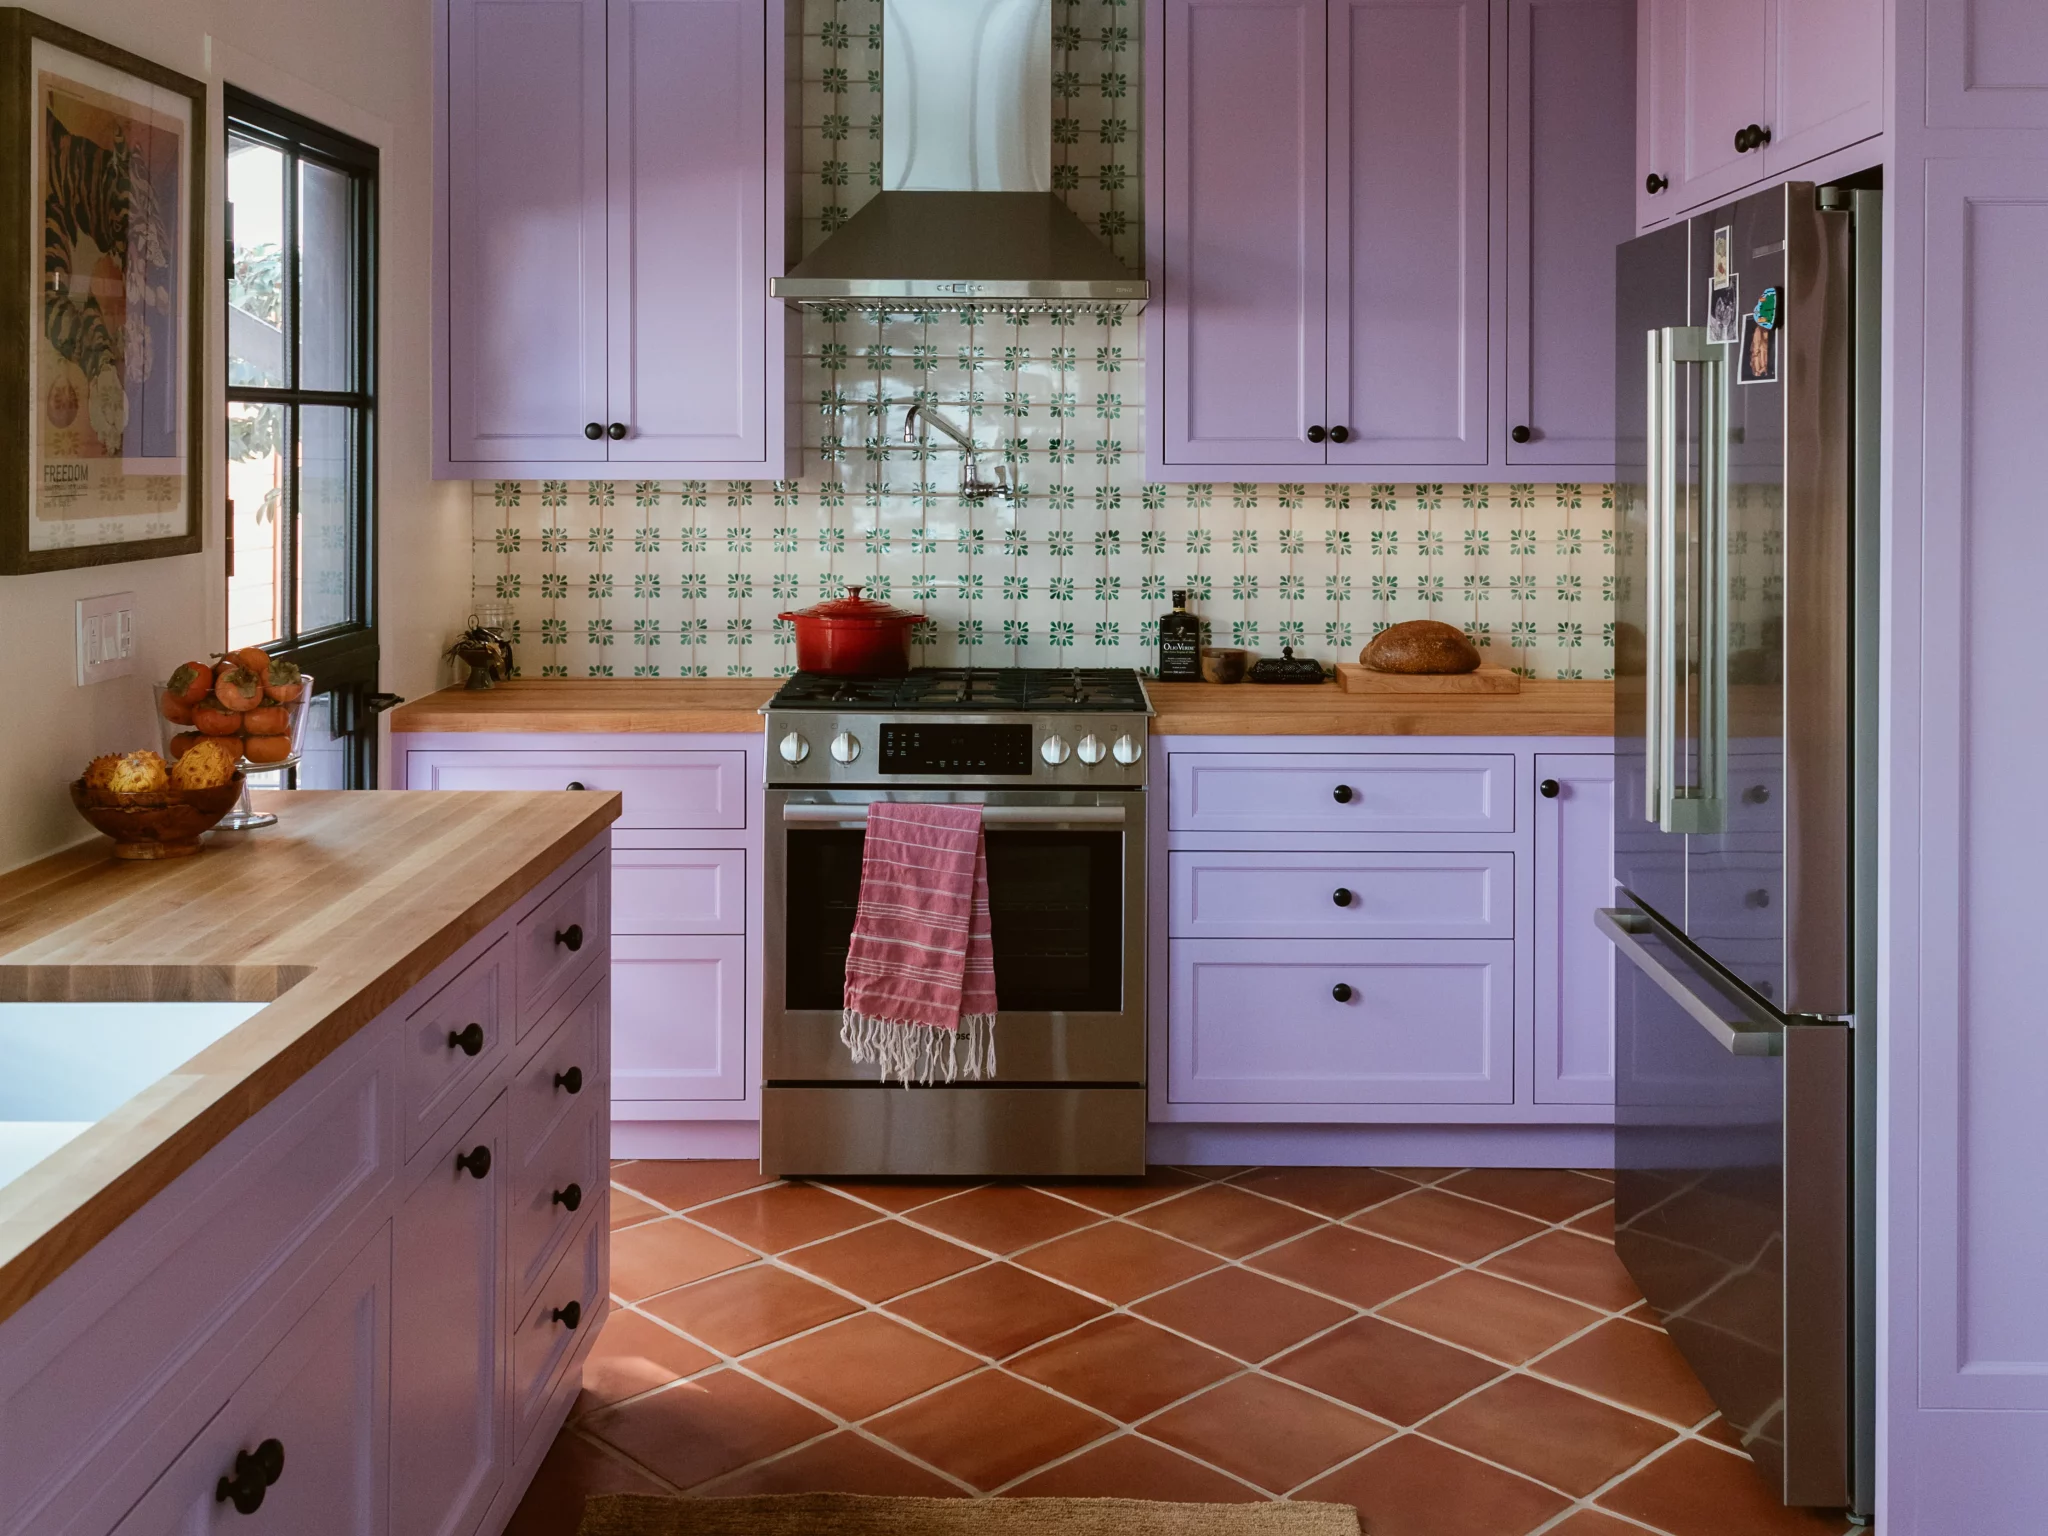 https://foyr.com/learn/wp-content/uploads/2022/12/kitchen-color-schemes-all-purple-scaled.webp